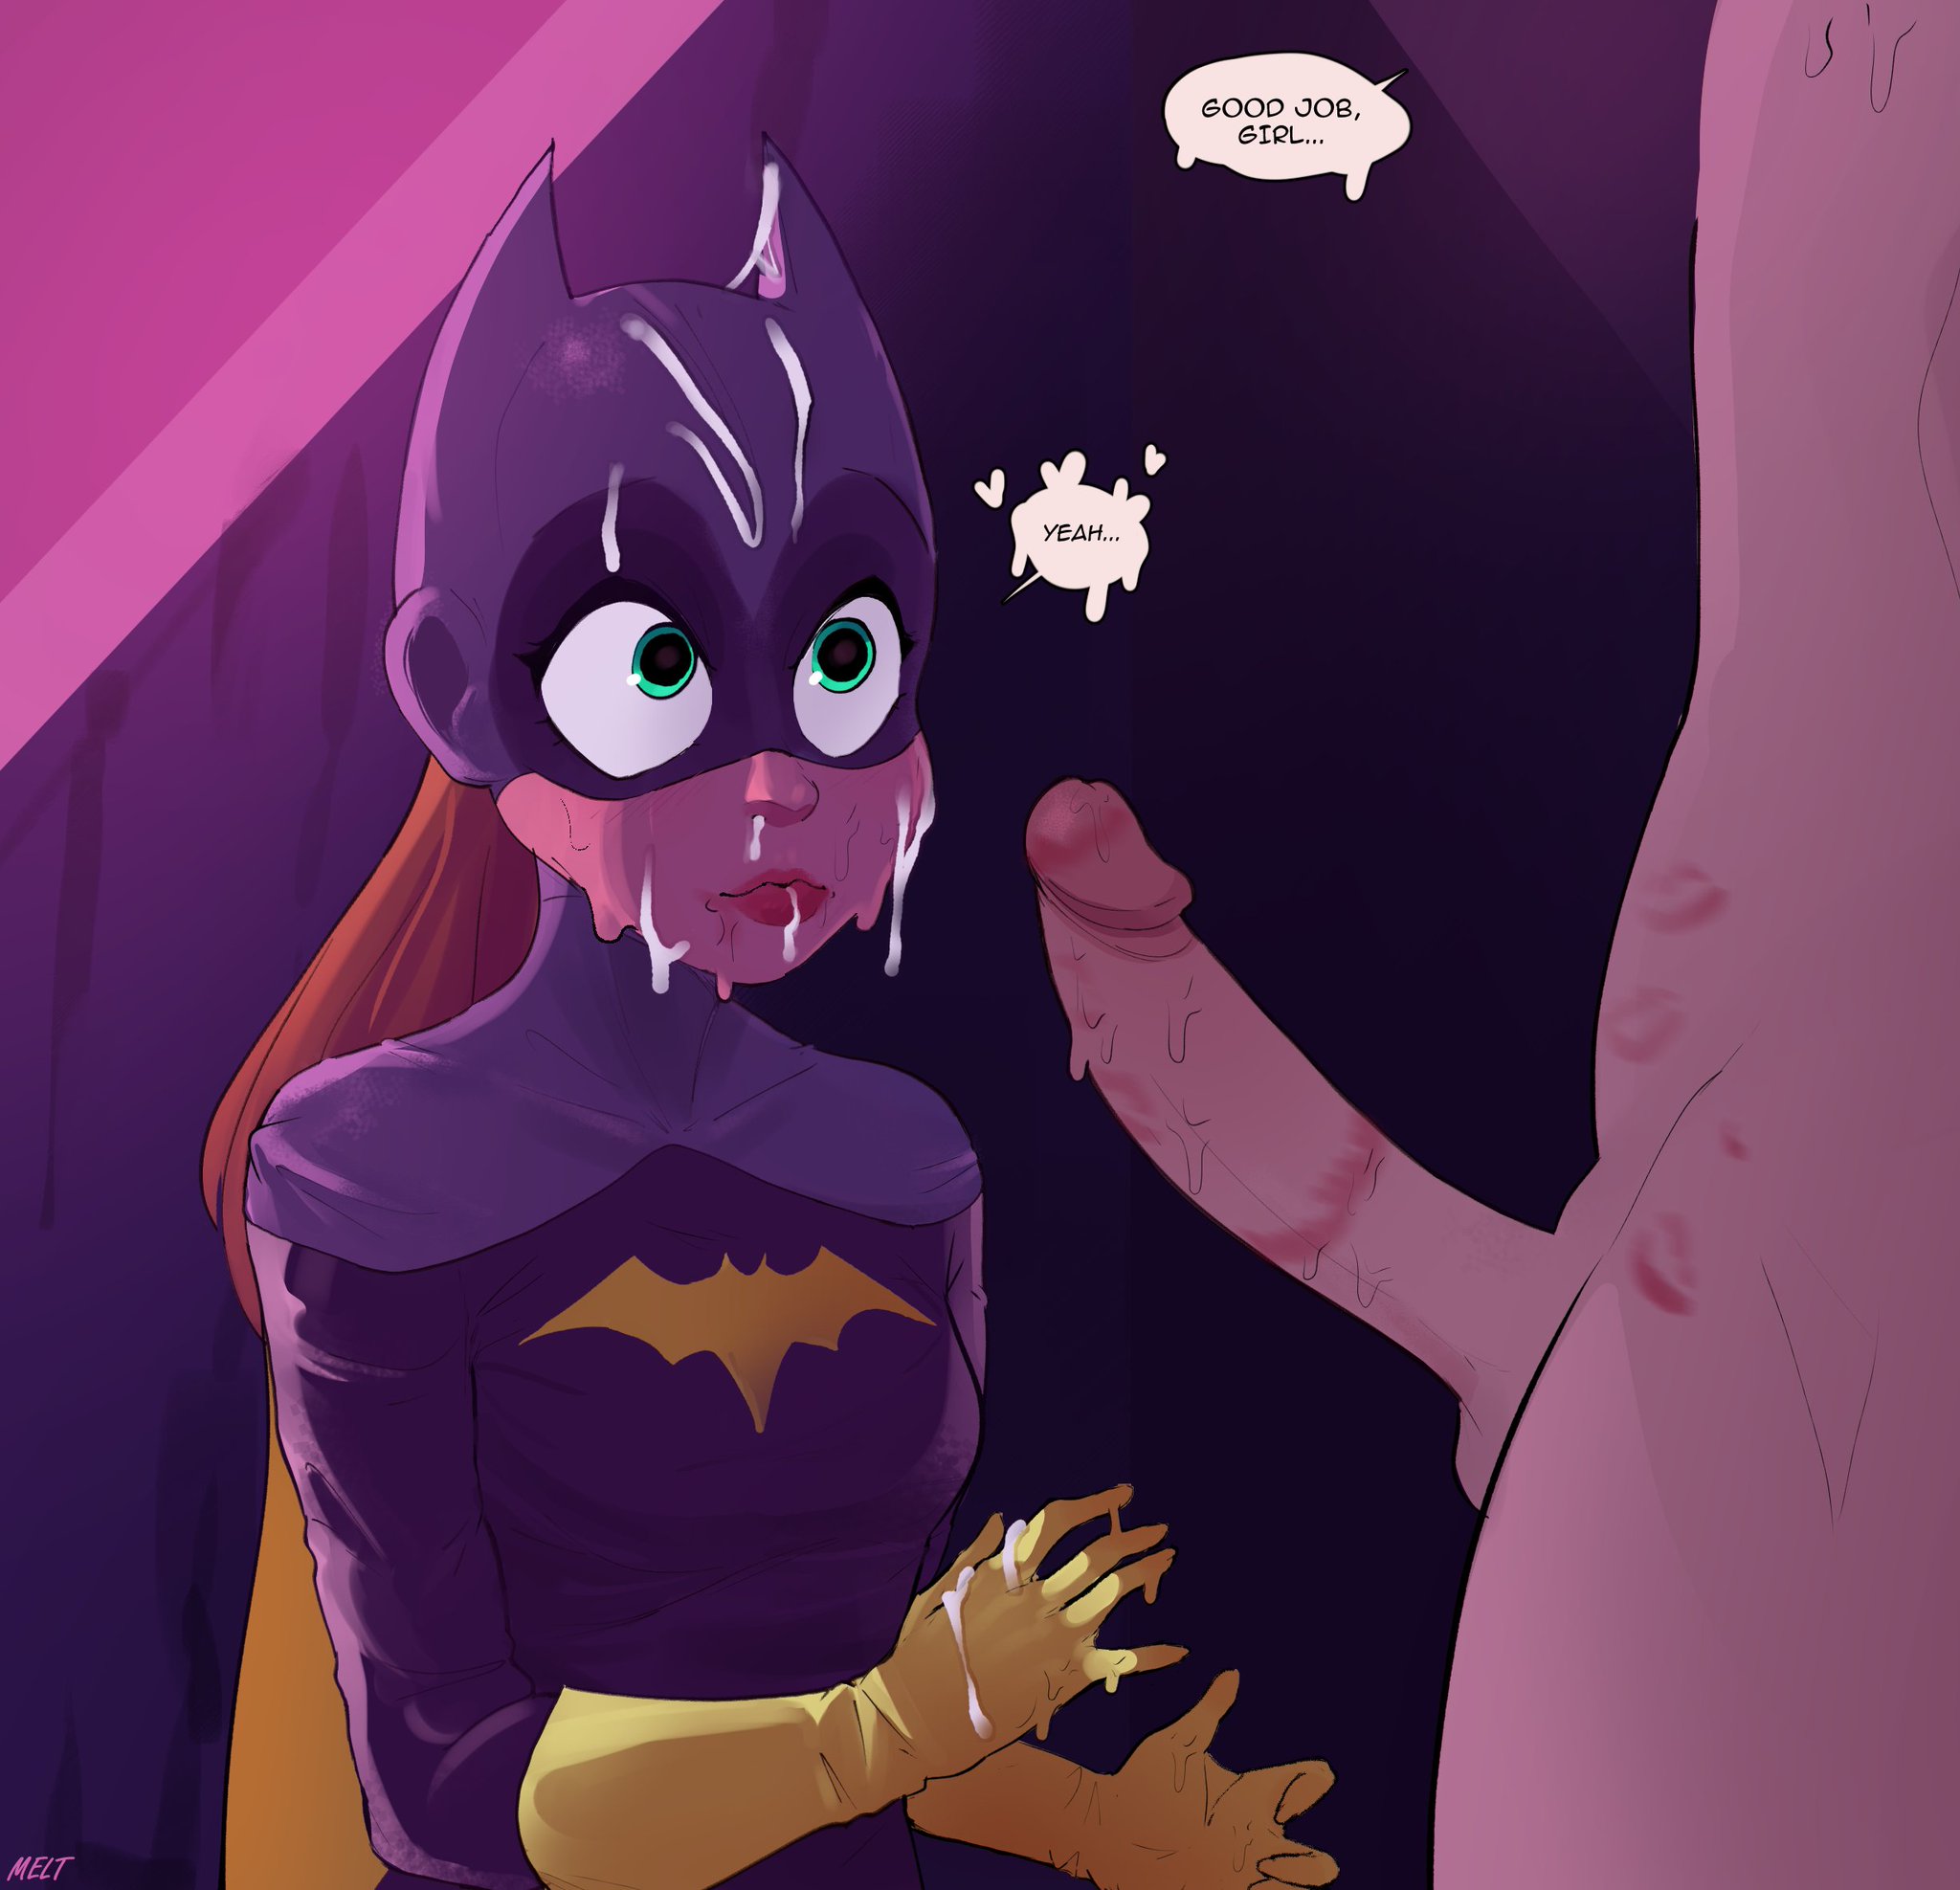 M E L T 🔞 art 🔞 on Twitter: "GoOd JoB #dc #Batgirl #nsfwart #hentai ...